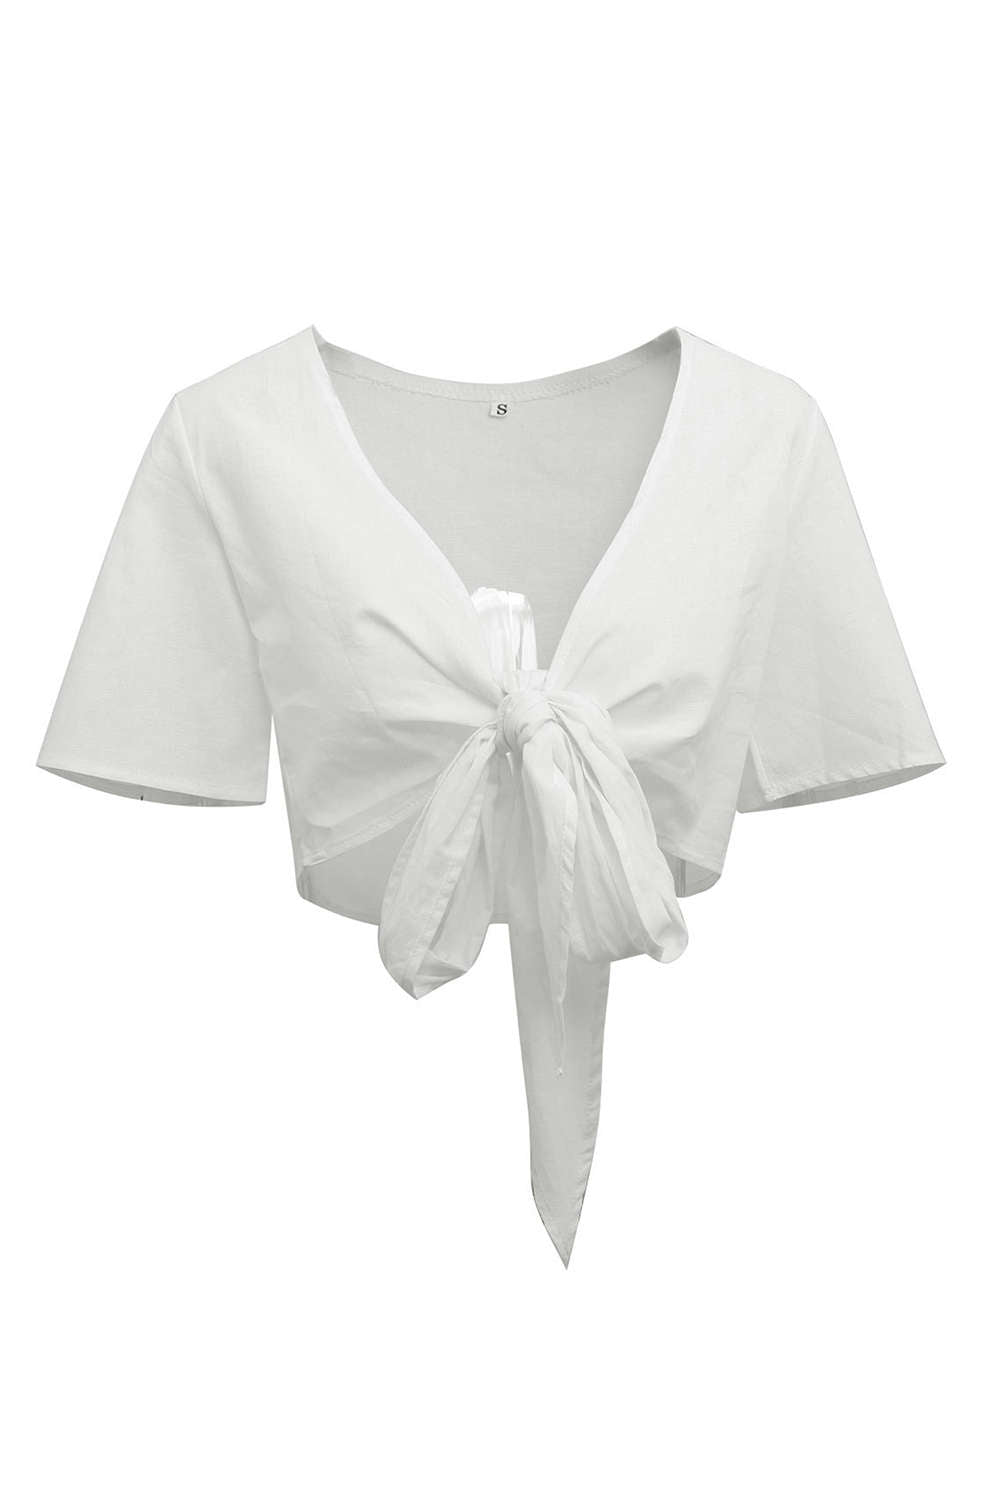 Iyasson Women Front Wrap Short Sleeve Crop Top